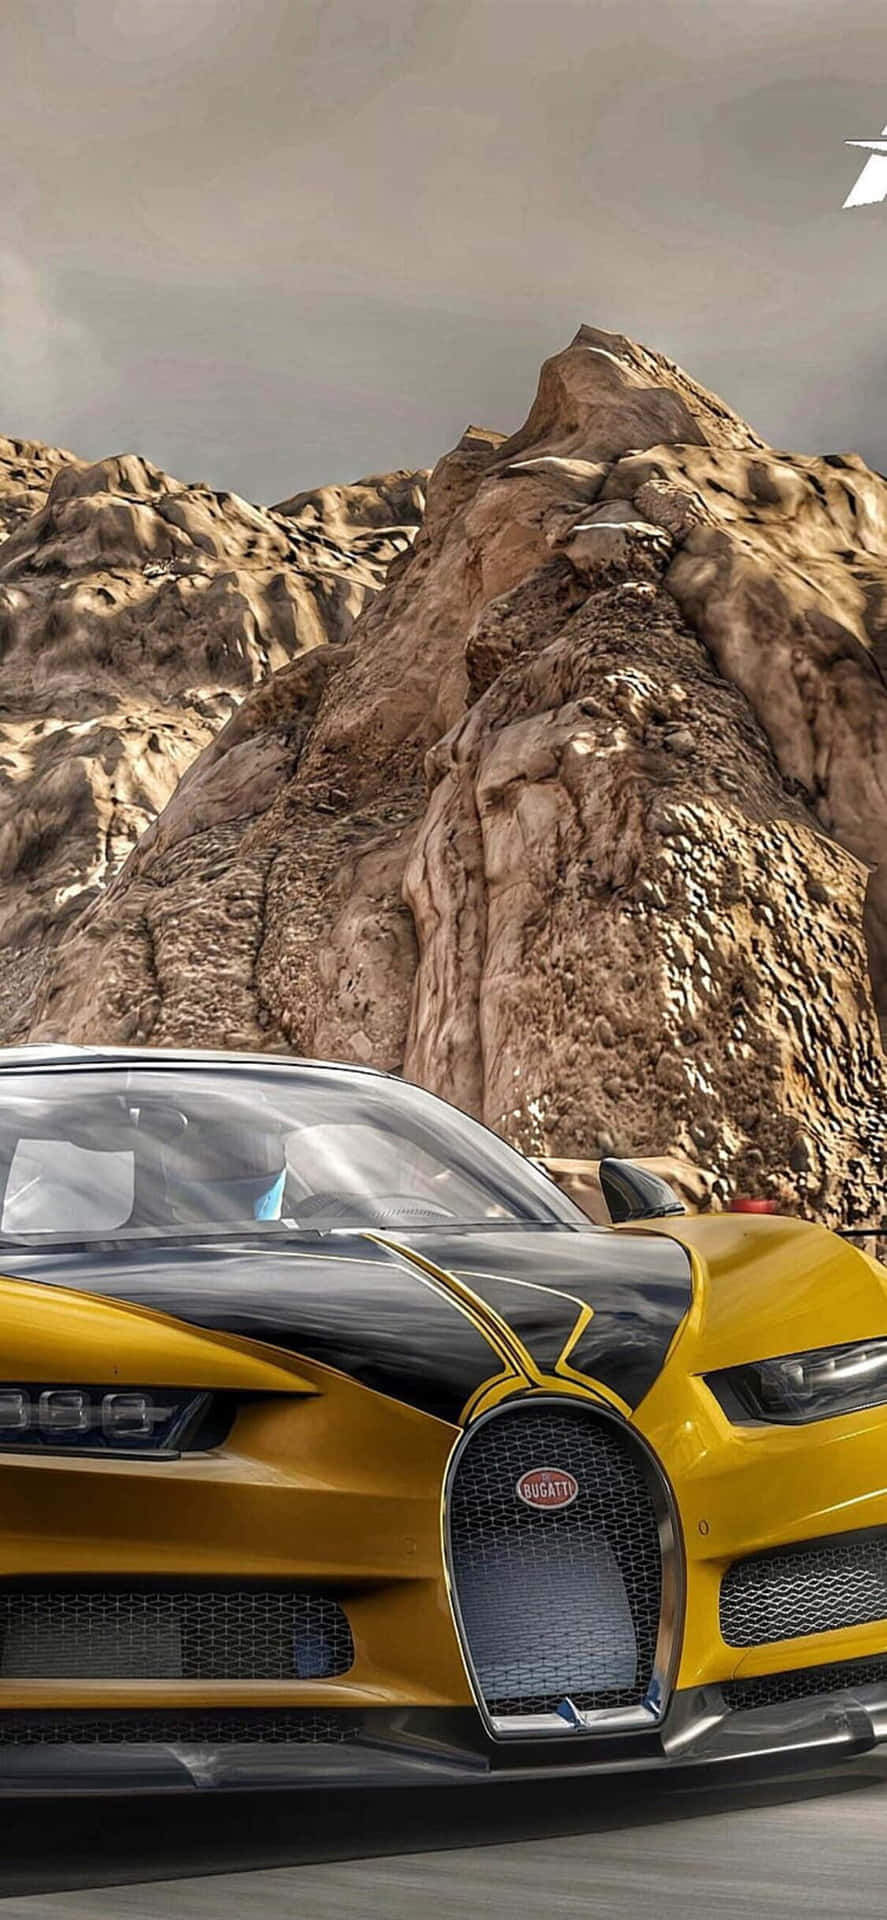 Gulbugatti Veyron Iphone X Forza Motorsport 7 Bakgrundsbild